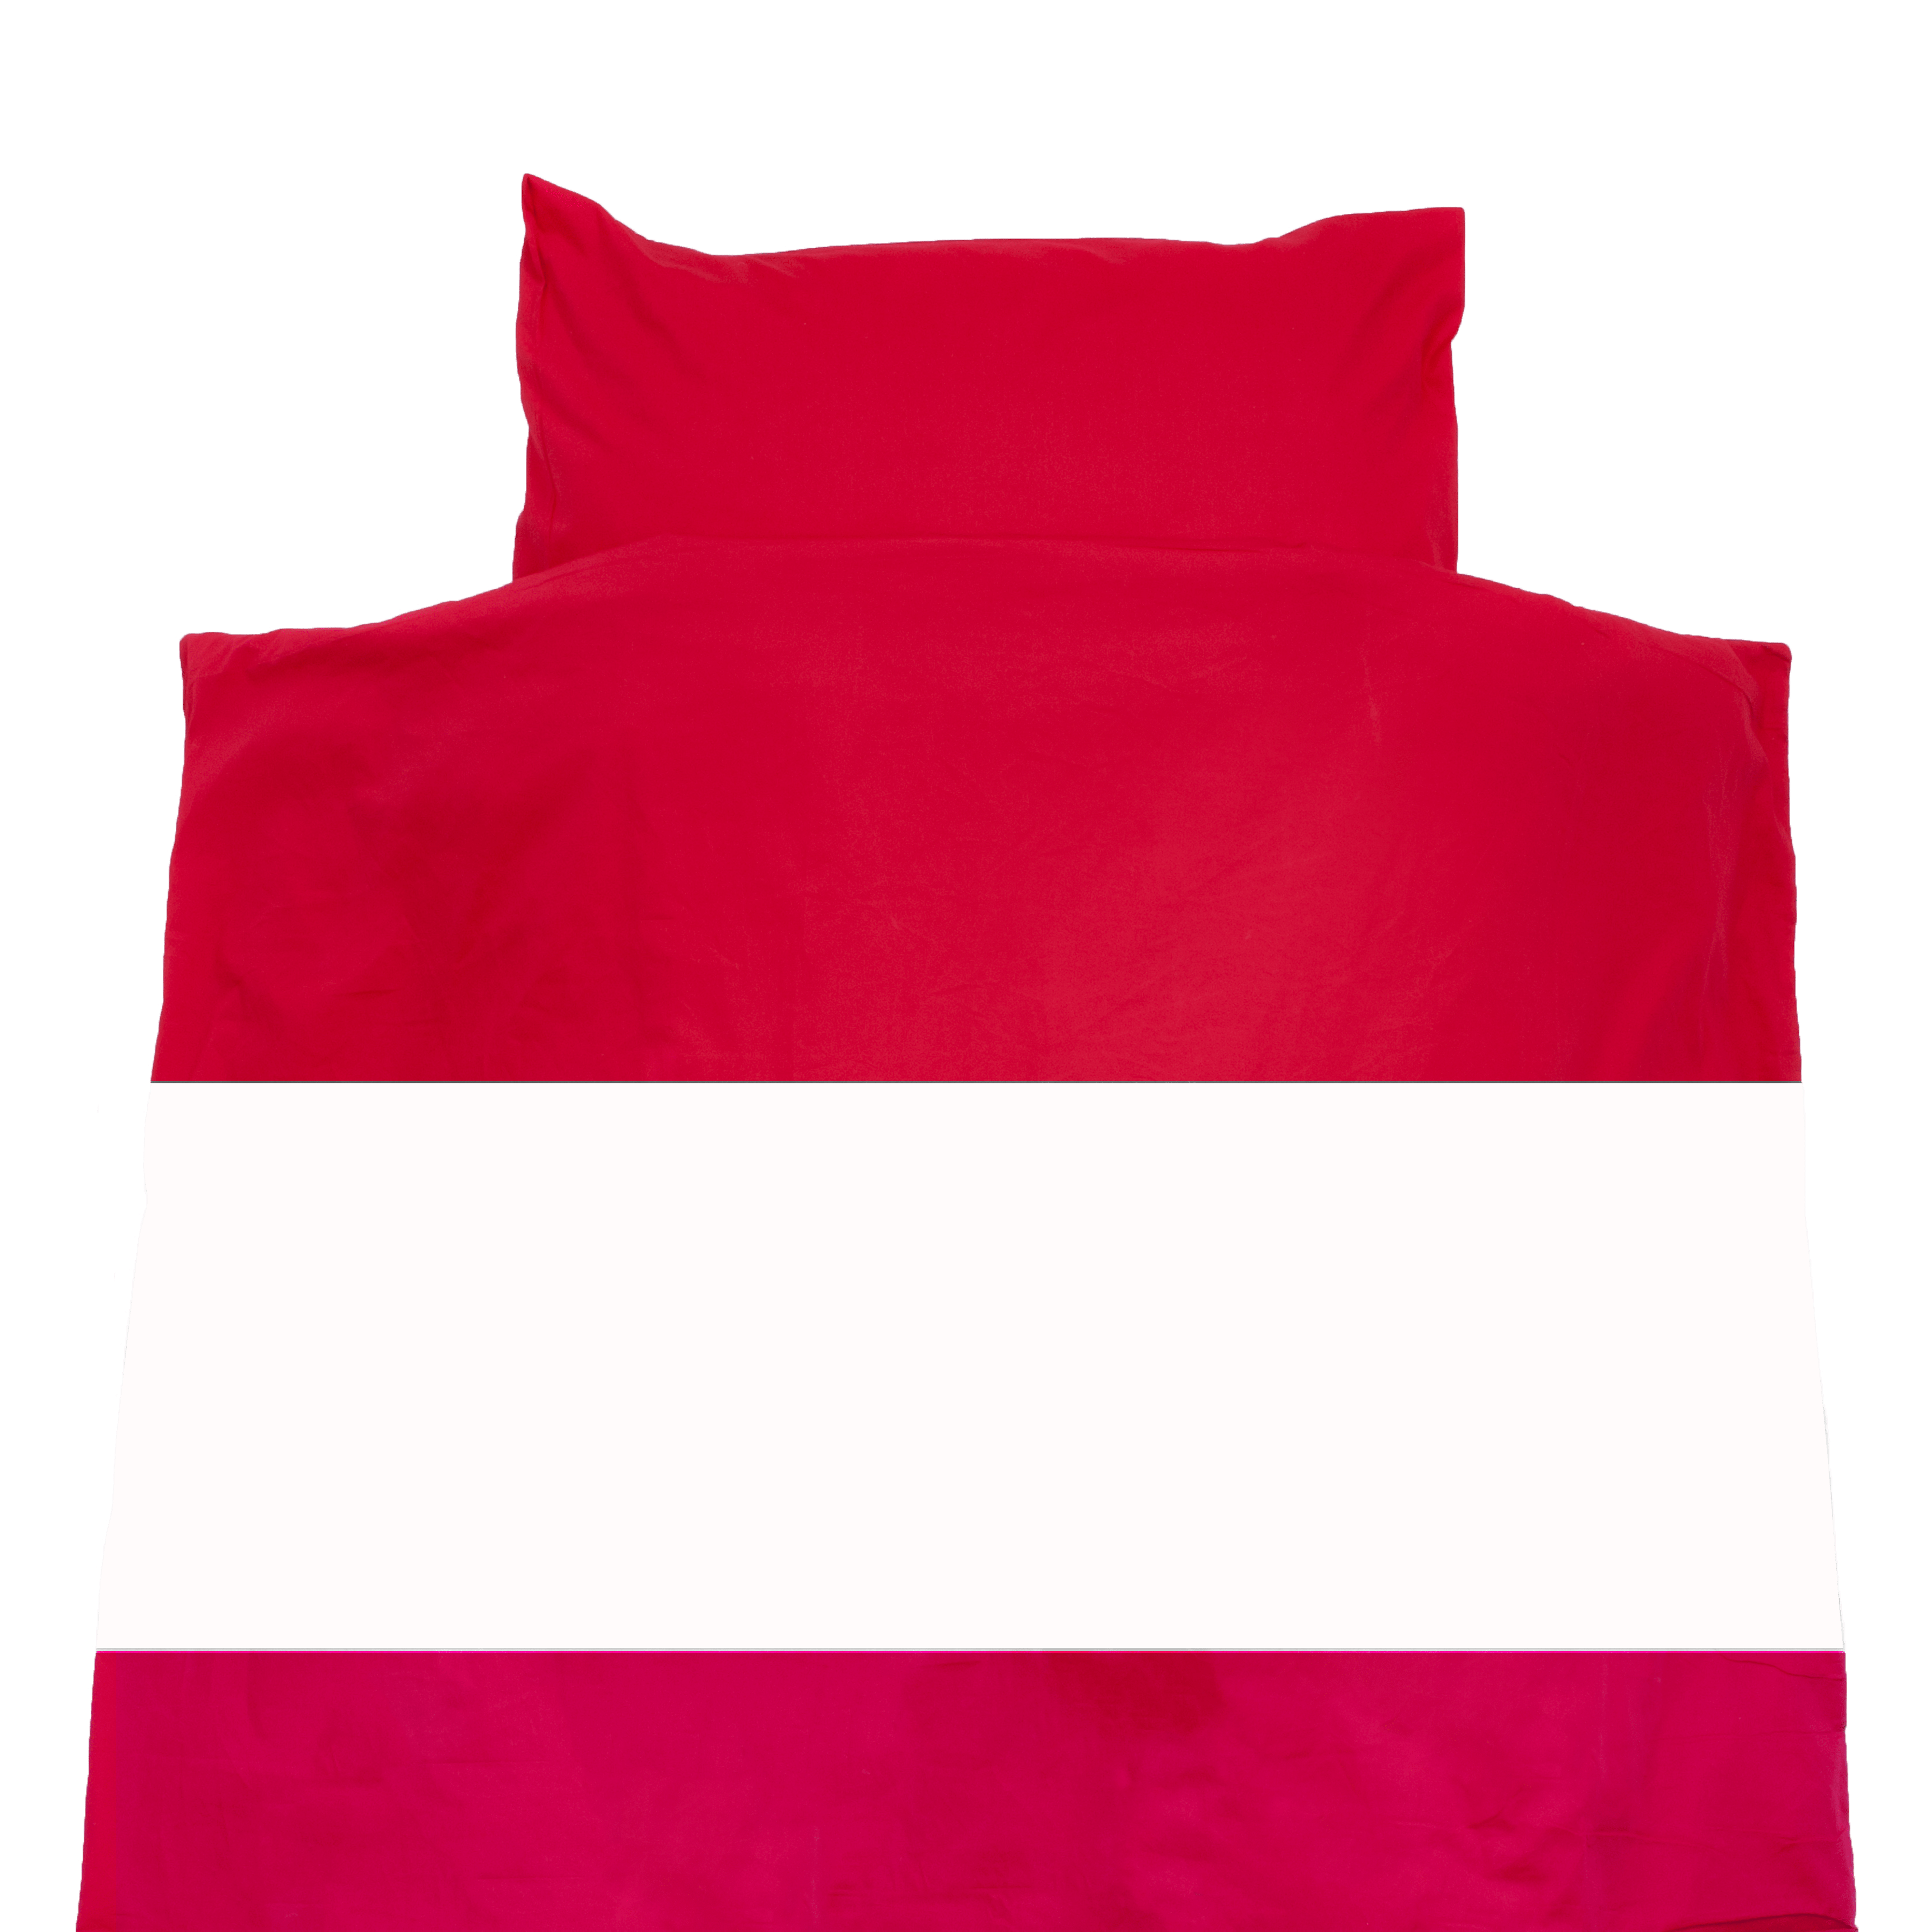 dekbedovertrek-rood-wit-roze